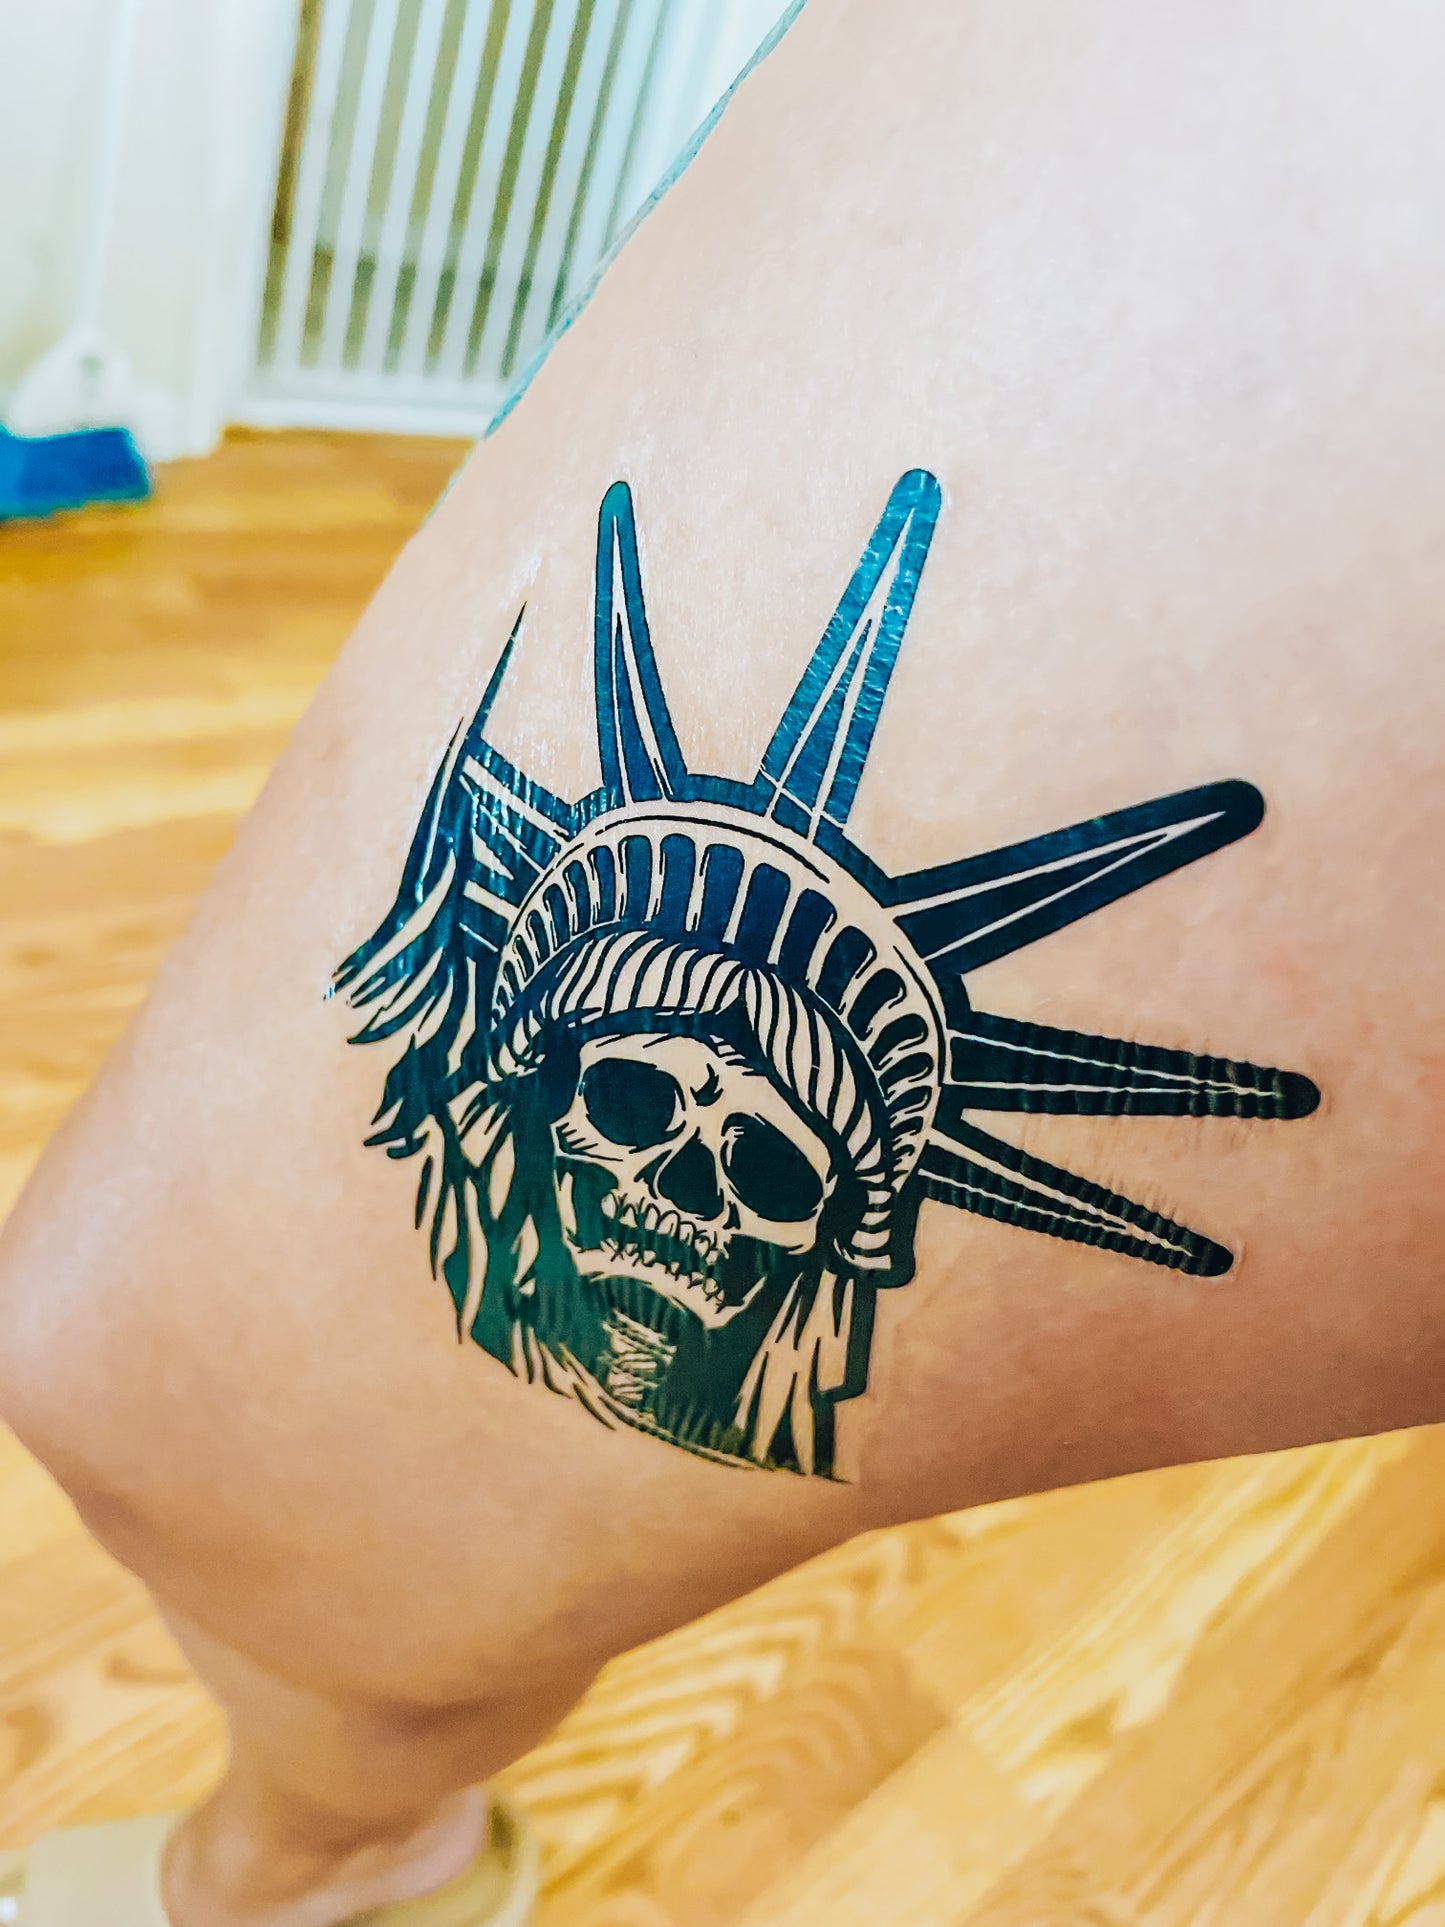 Liberty Skellie Temporary tattoo